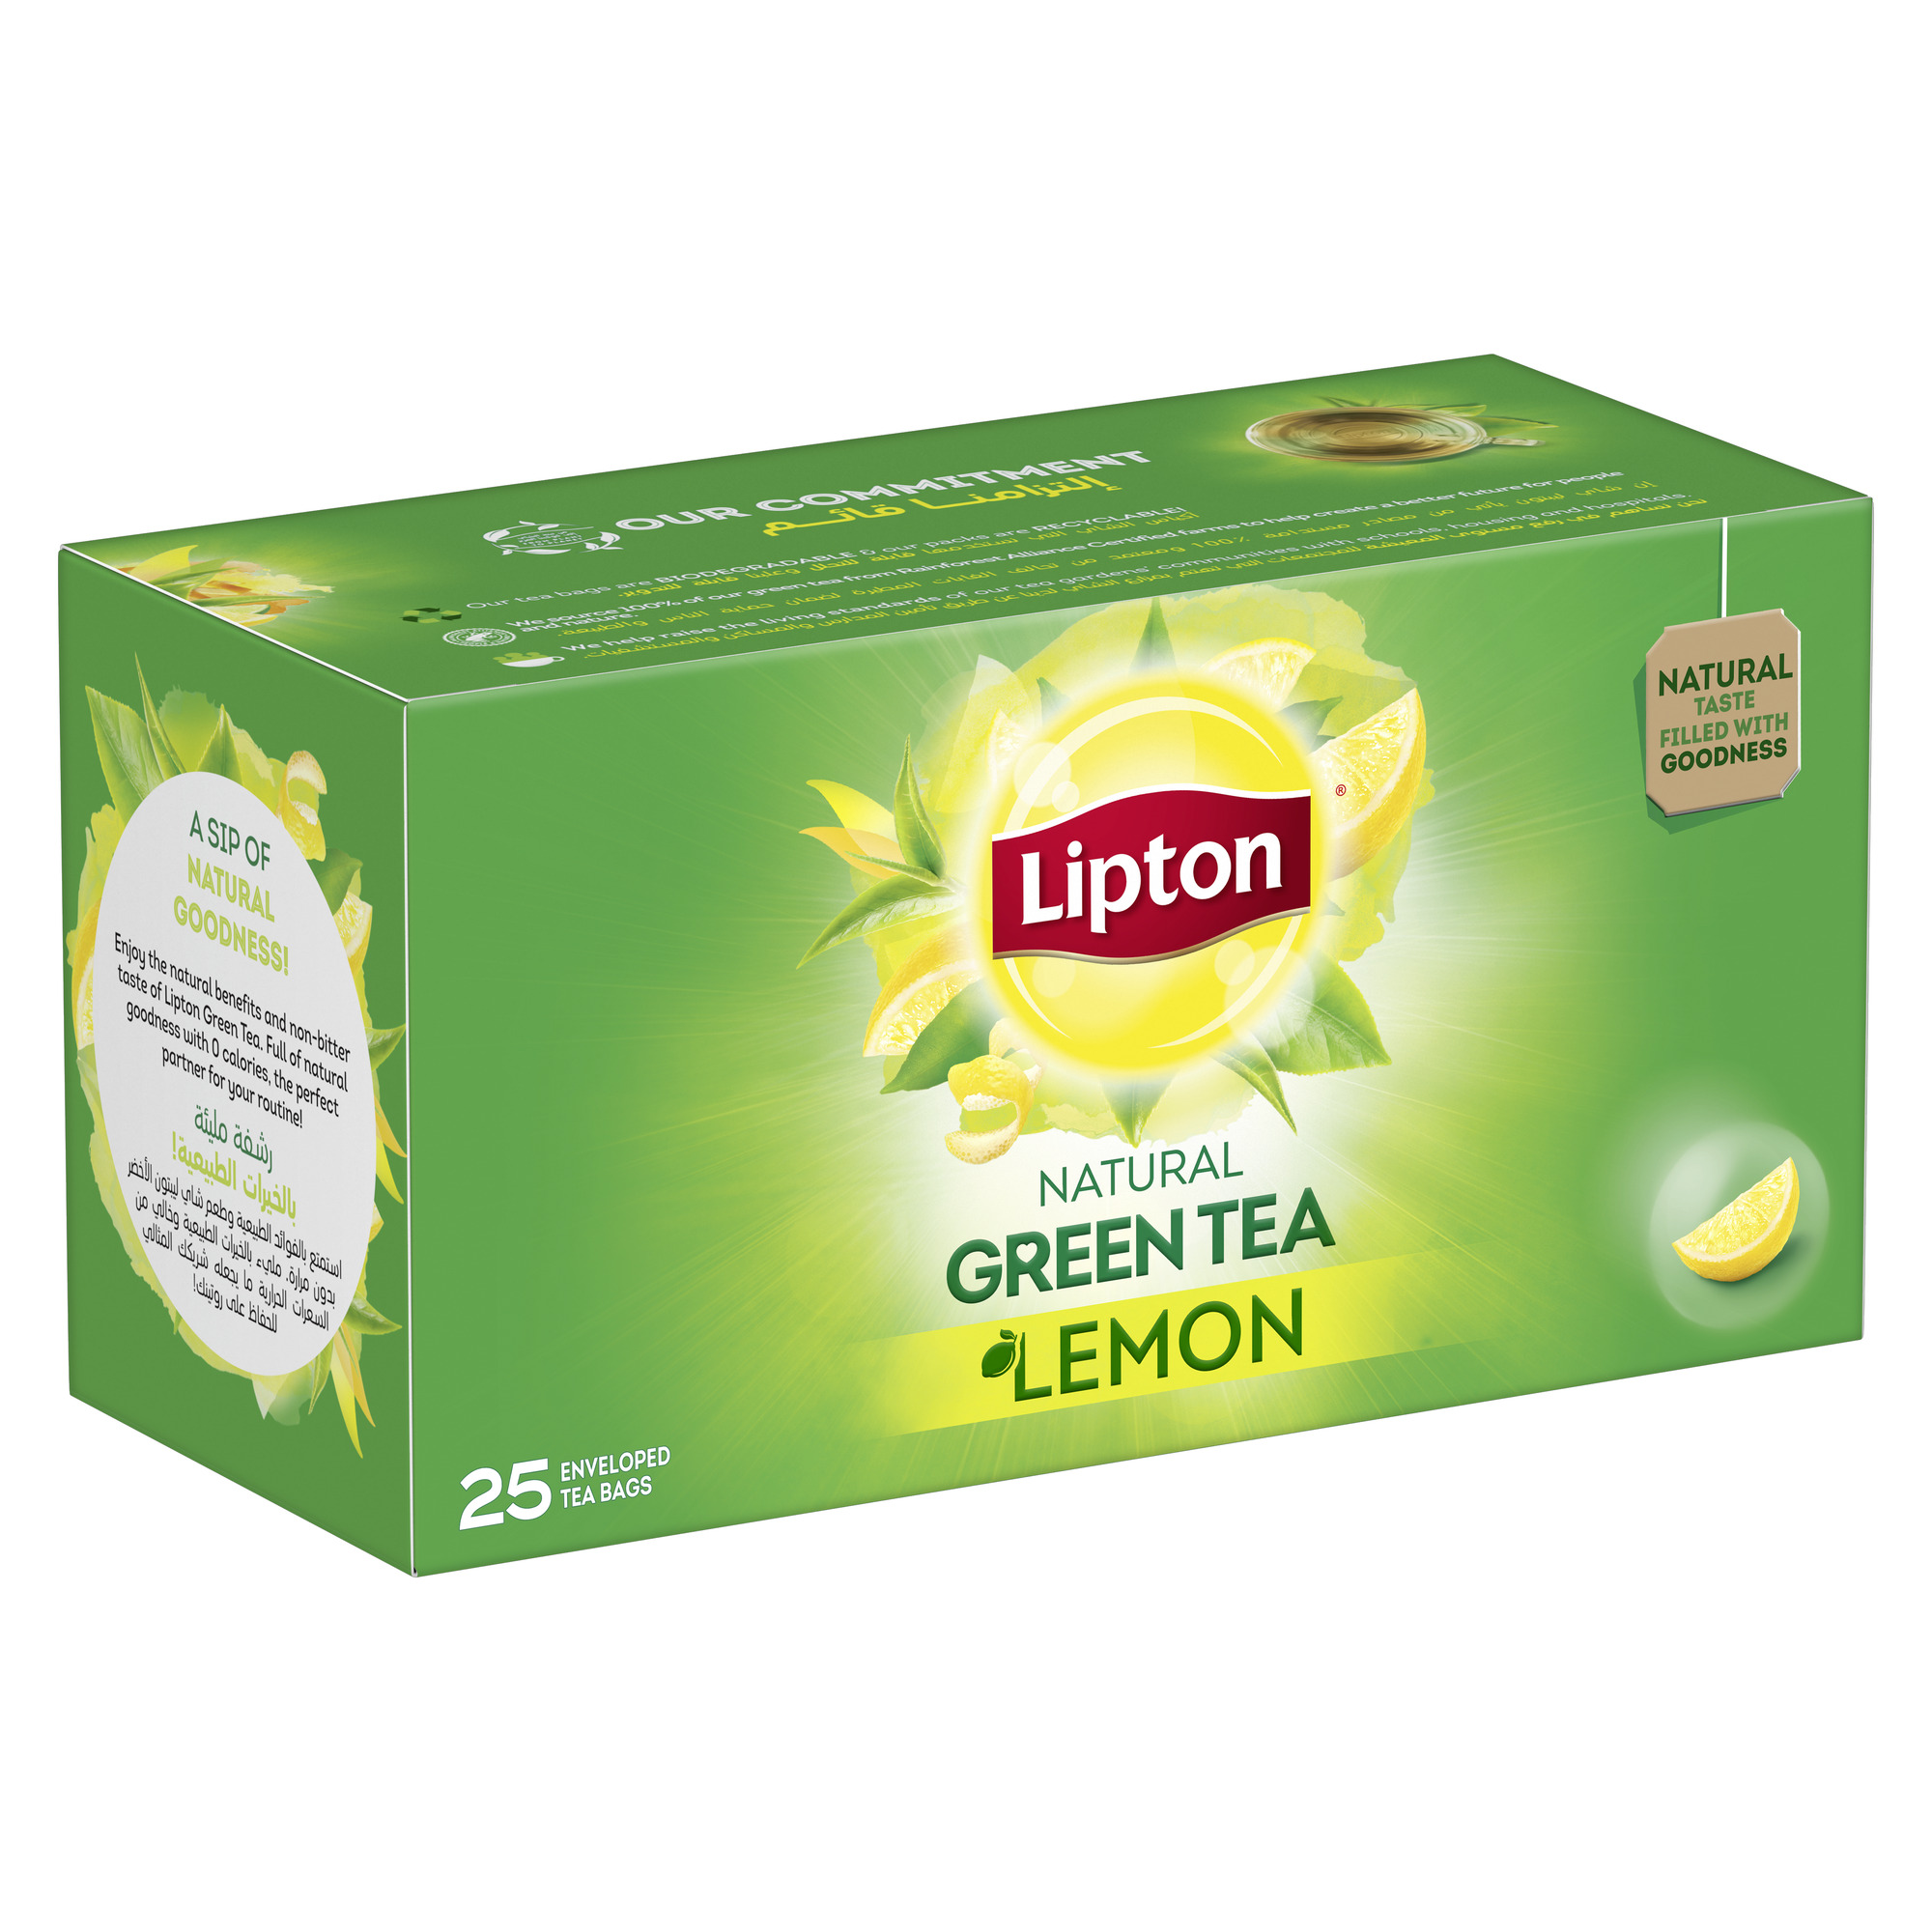 Lipton Green Tea Bags are $1.49 at Kroger! - Kroger Krazy